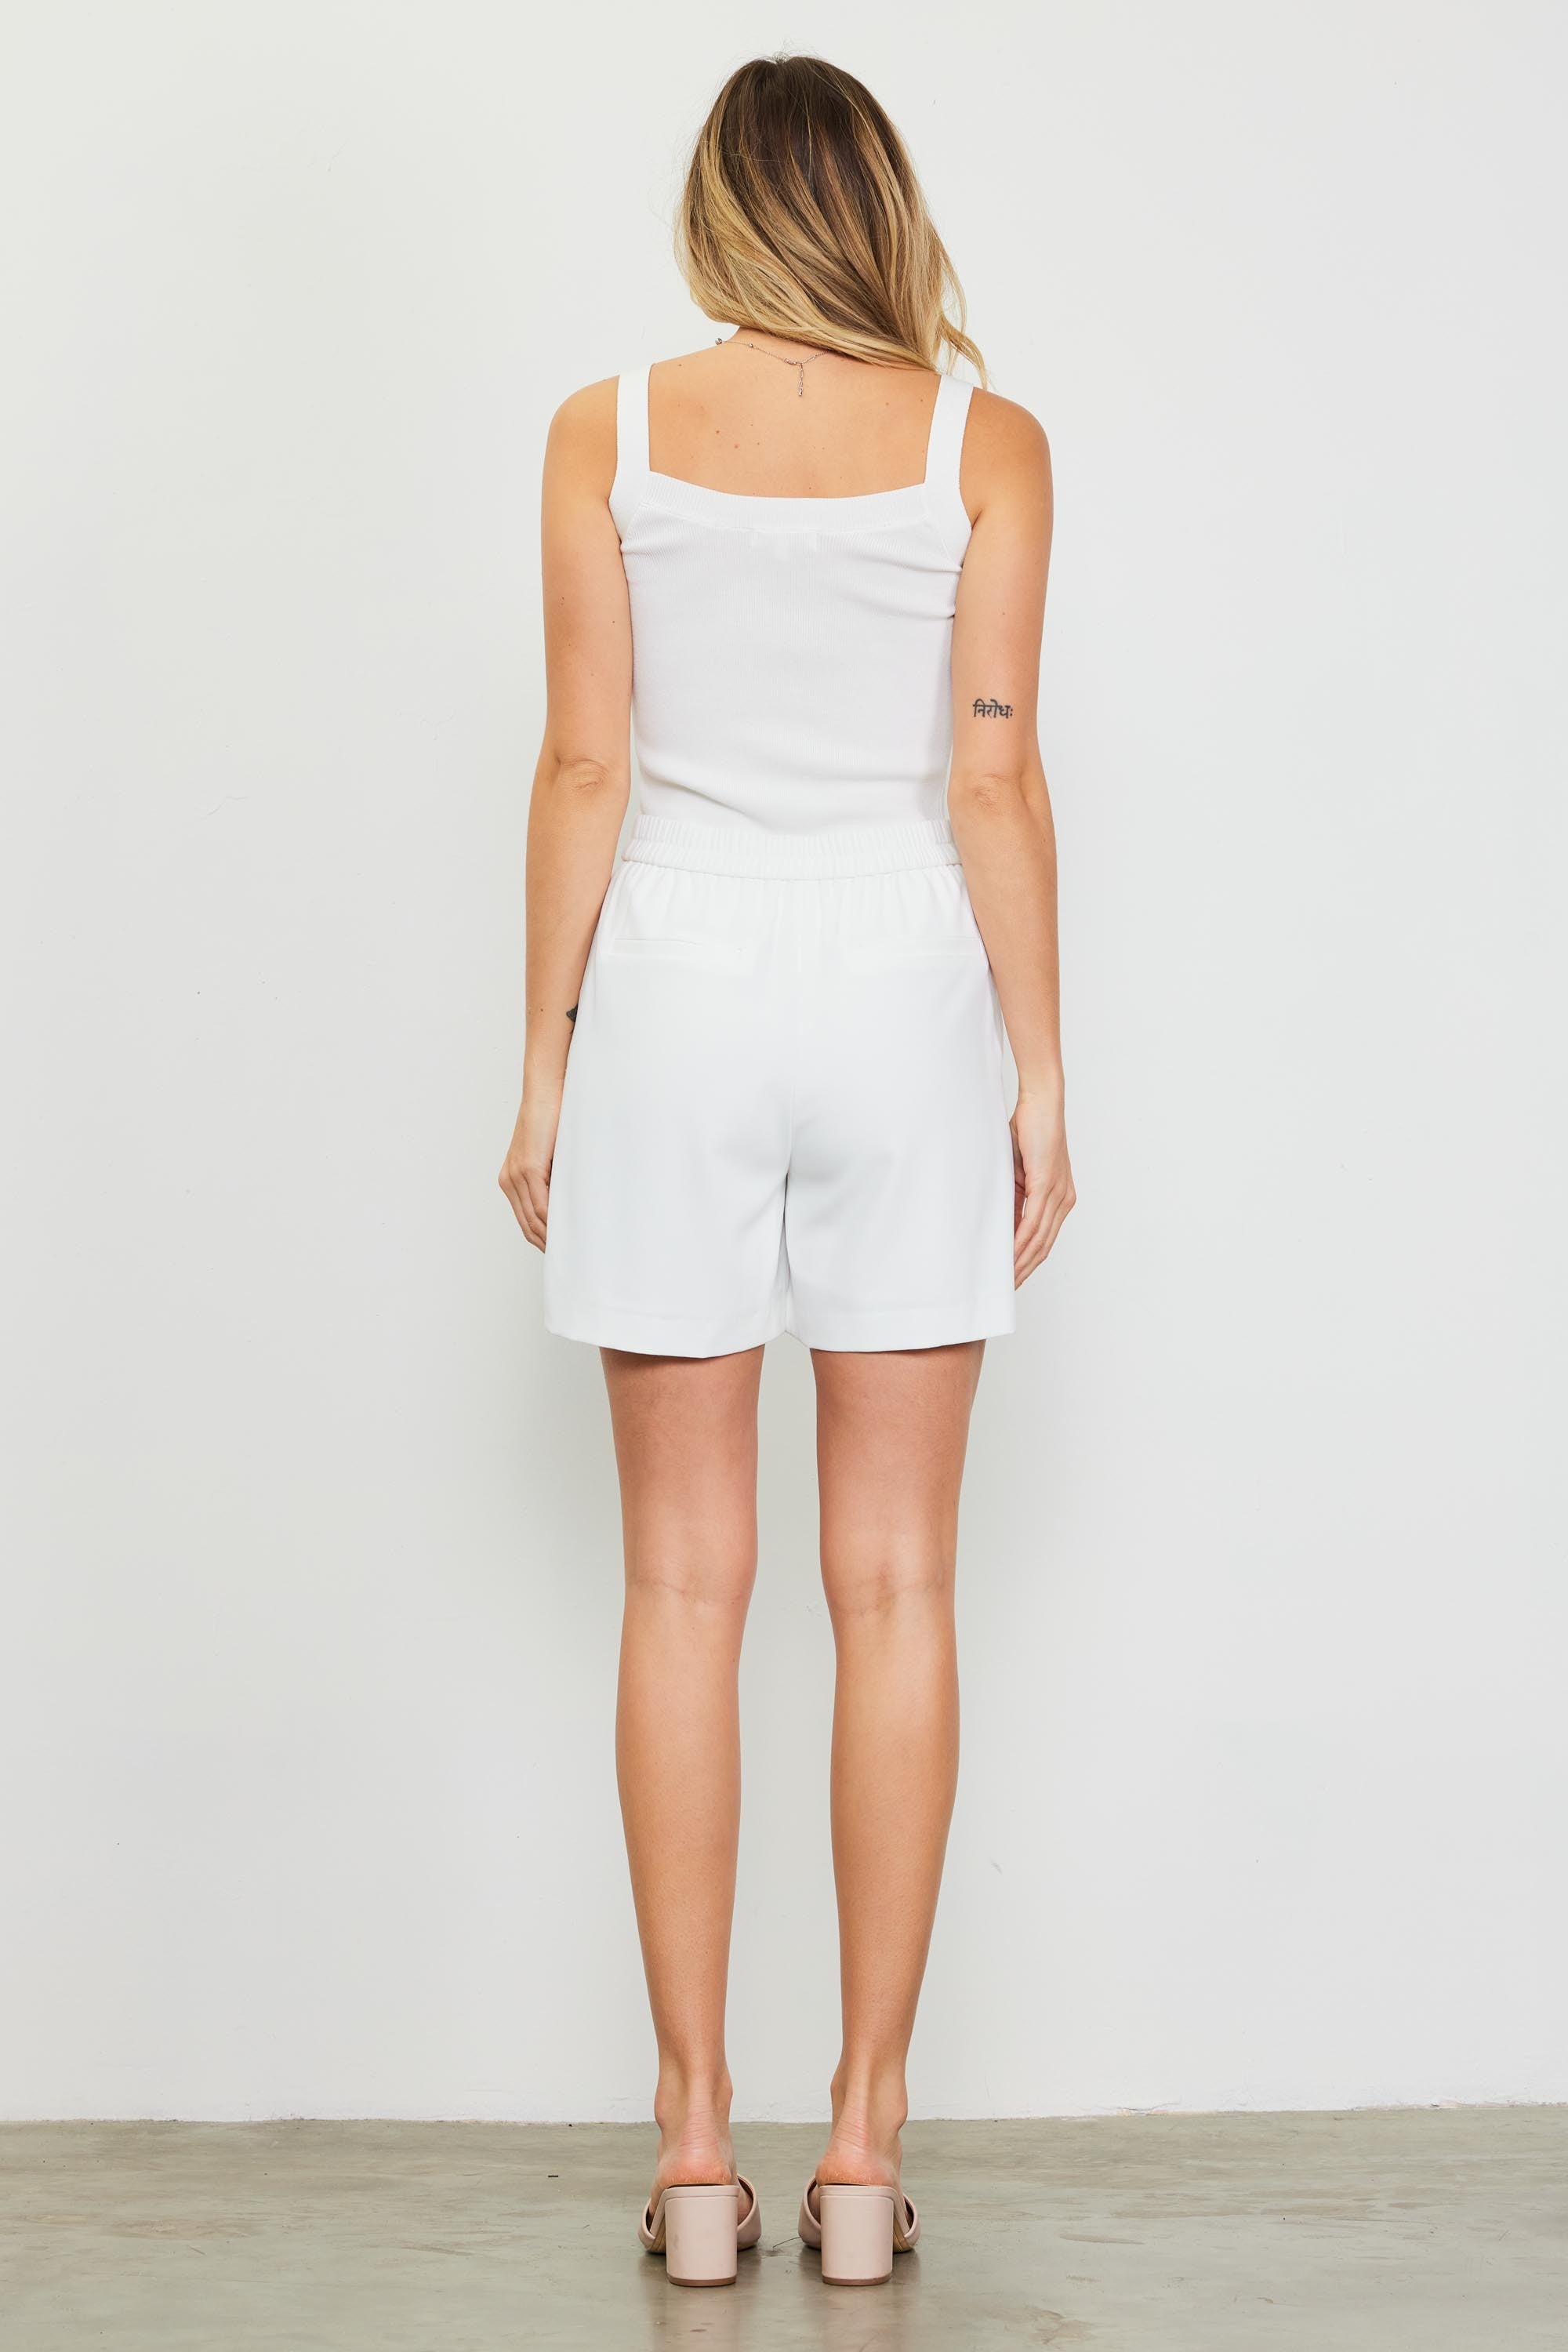 White Pleated Shorts